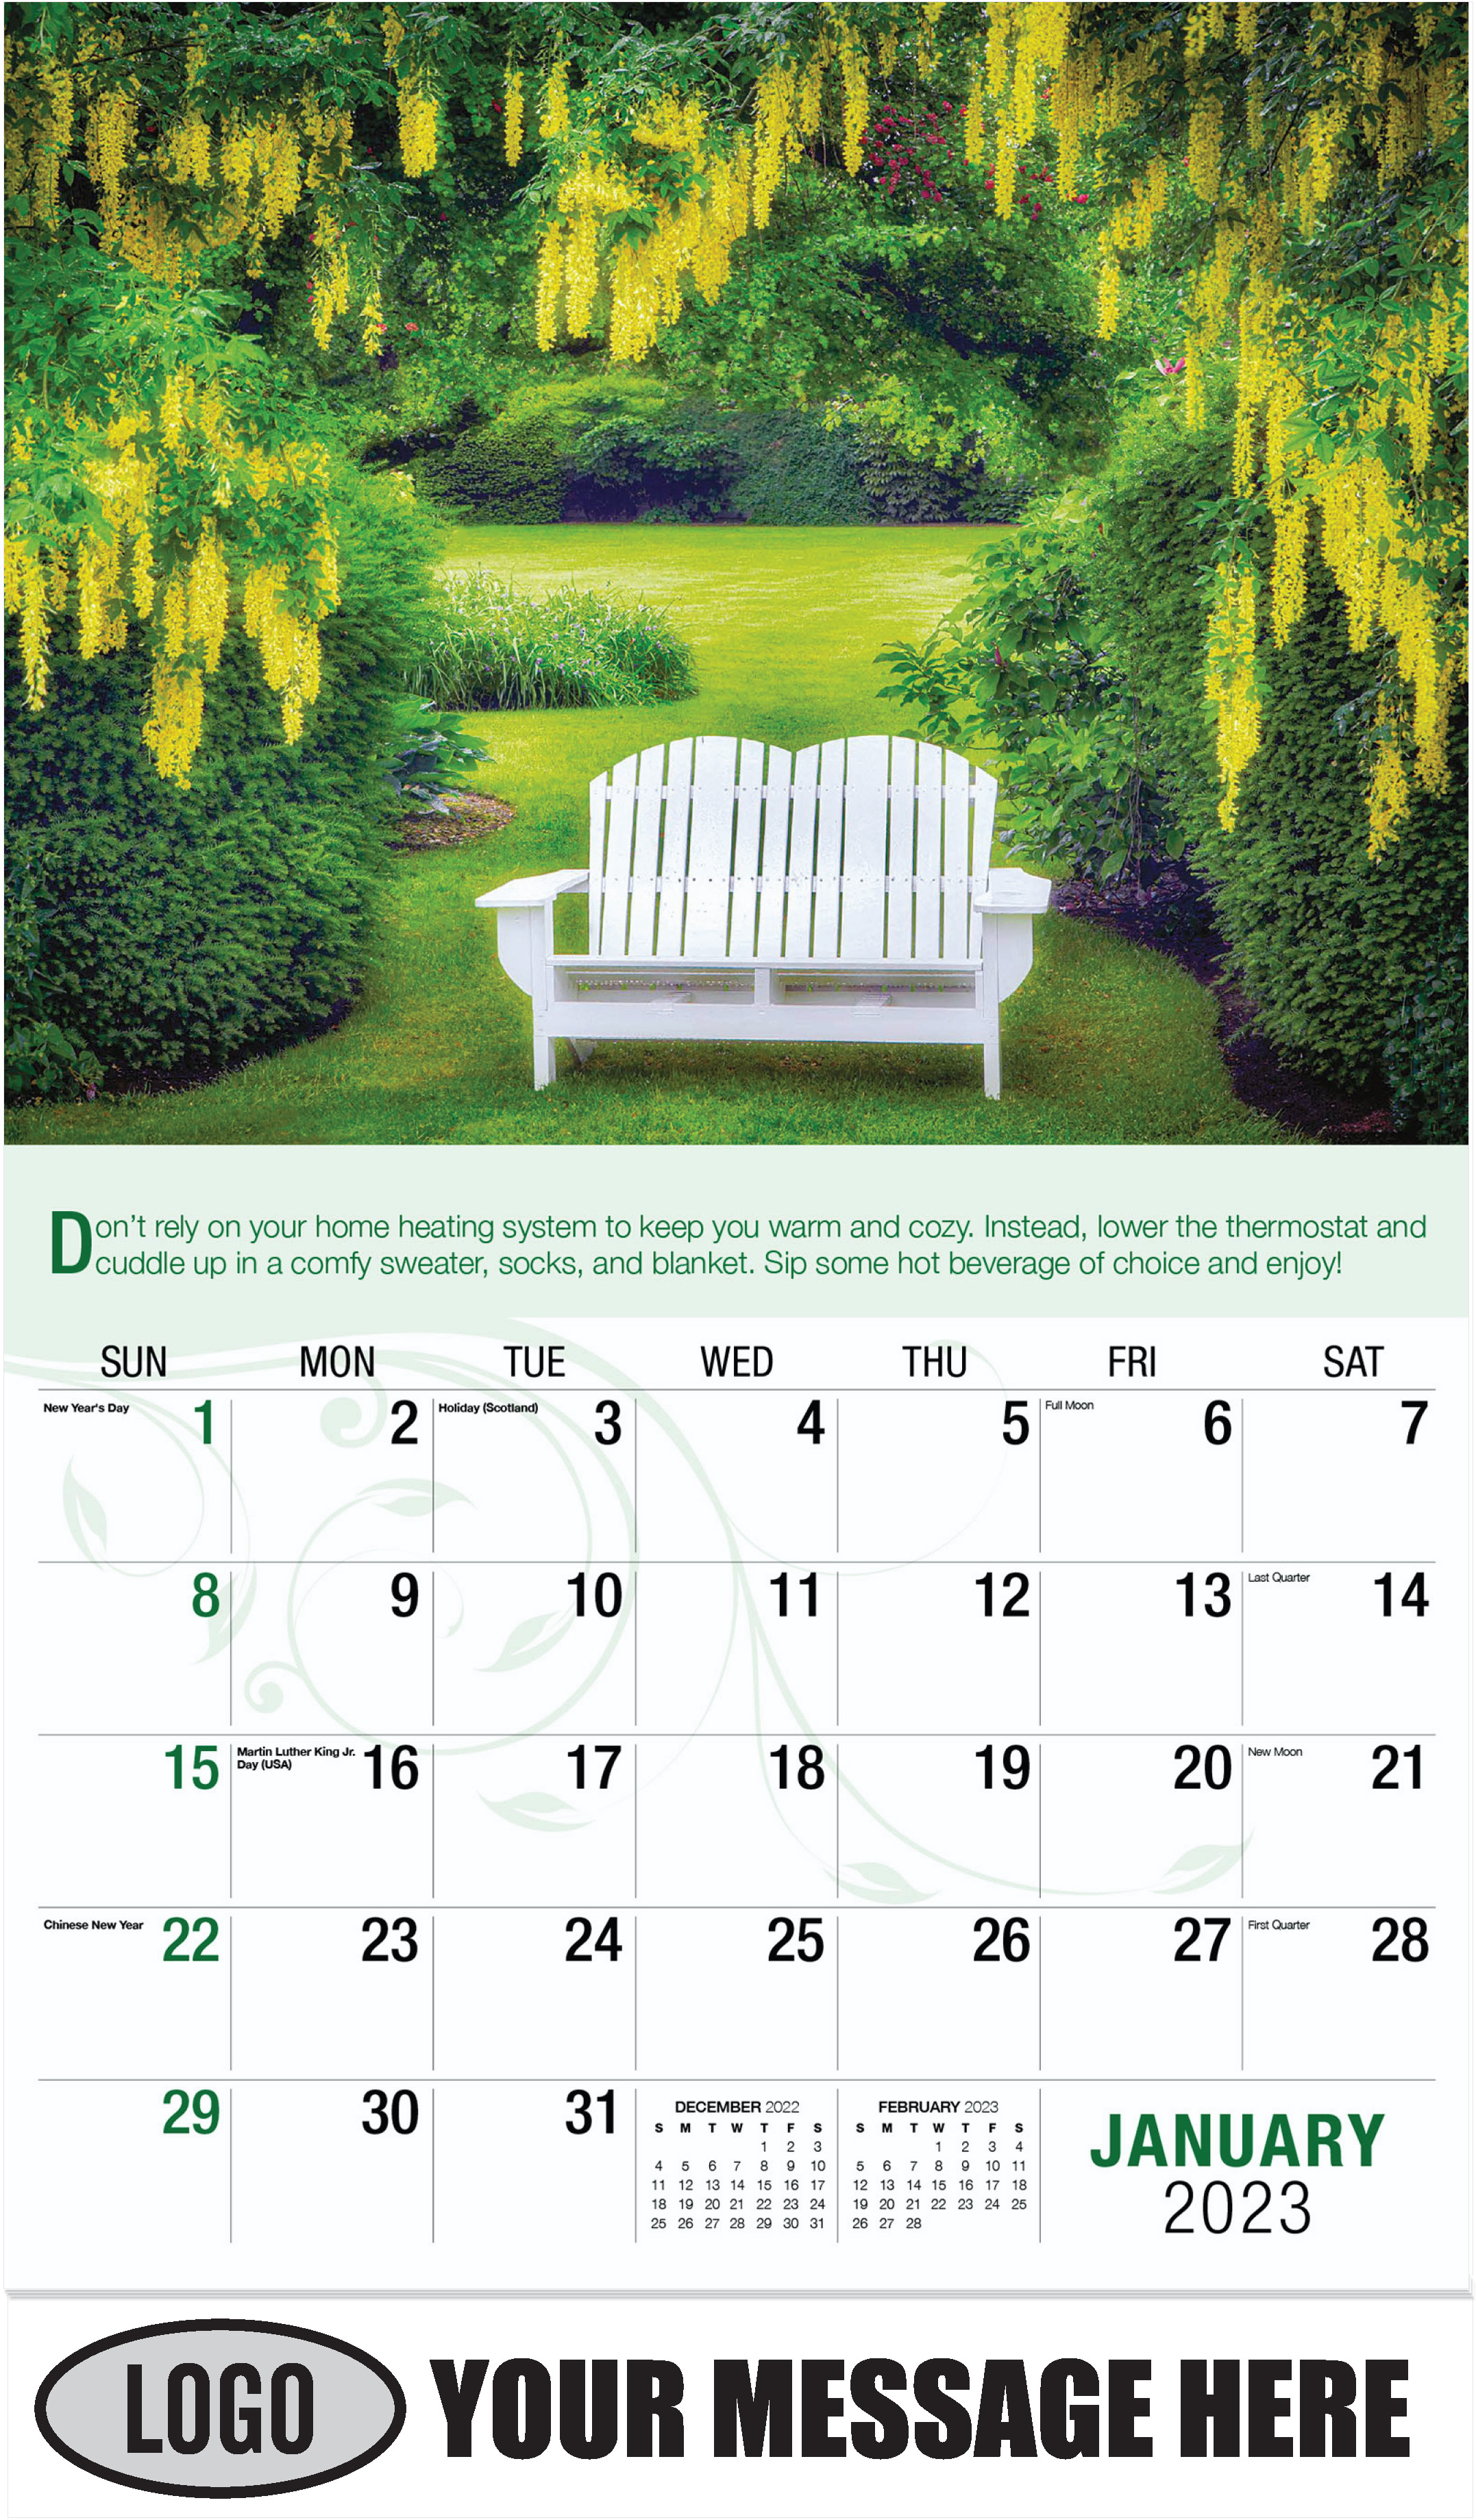 Schreiner's Iris Gardens, Oregon - January - Go Green 2023 Promotional Calendar